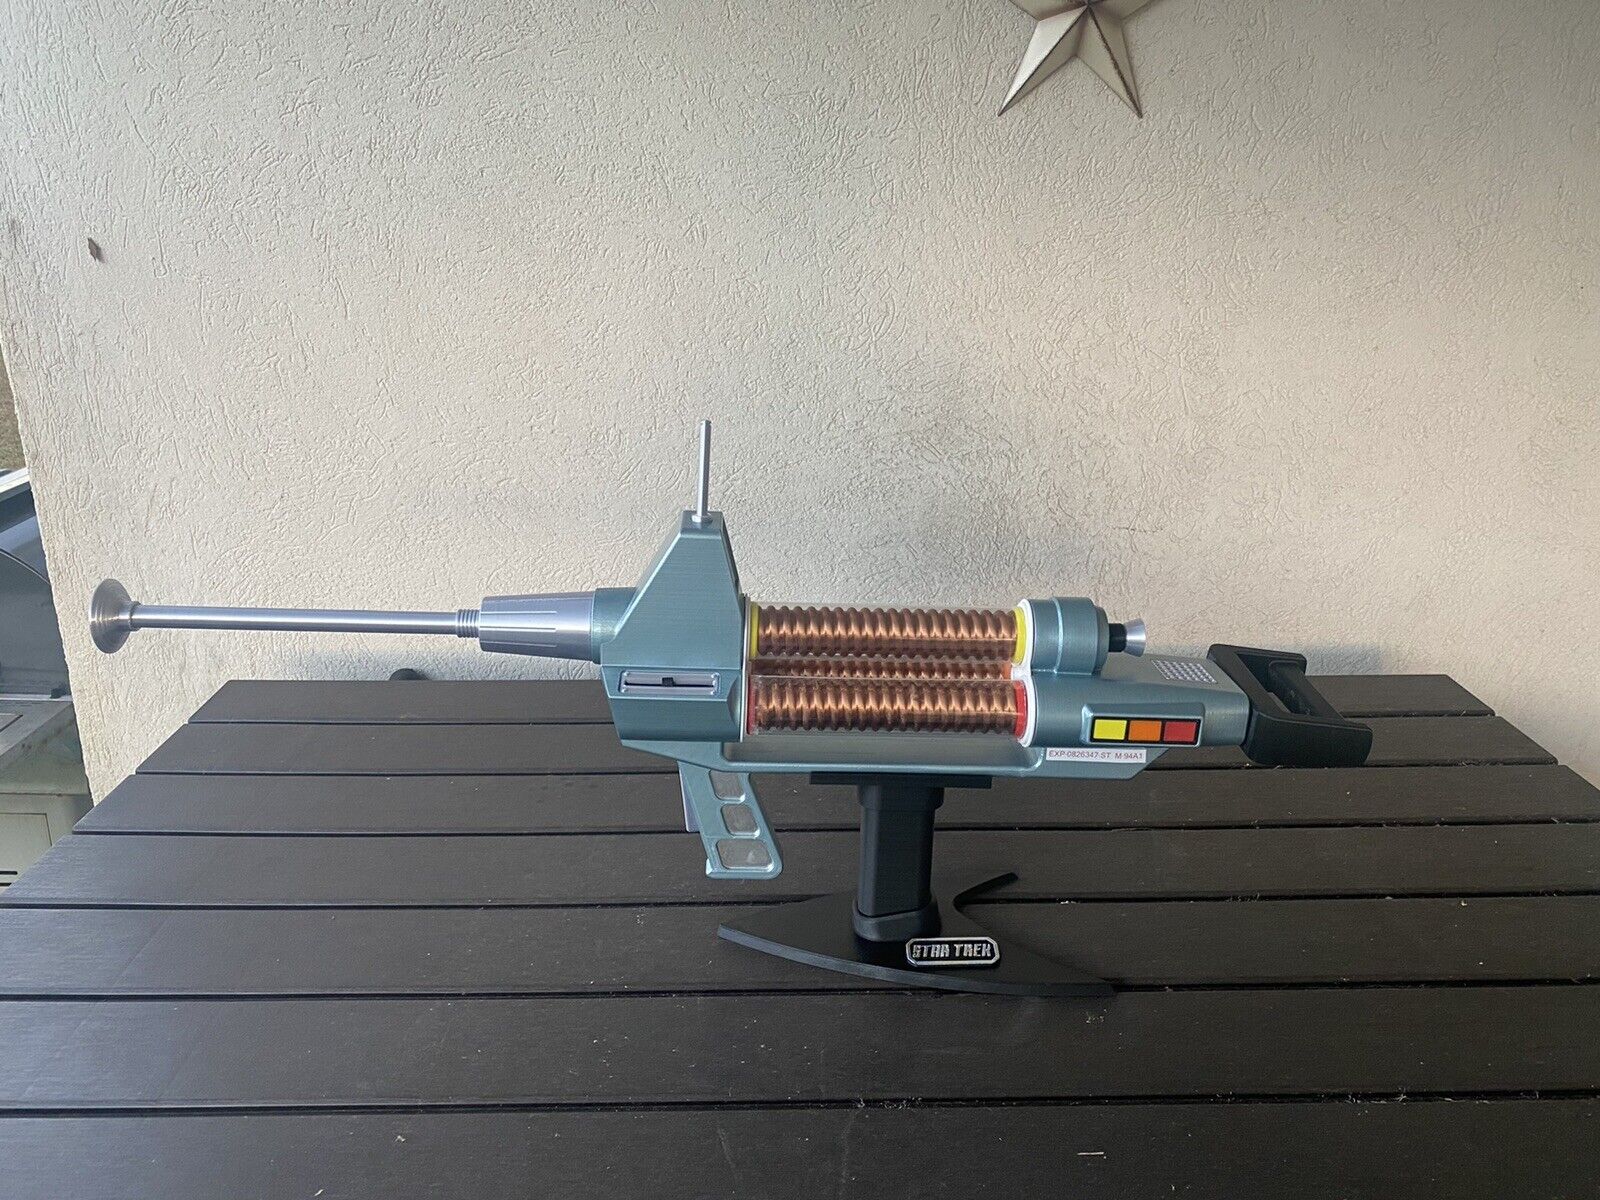 Star Trek TOS Inspired Life Size Phaser Rifle